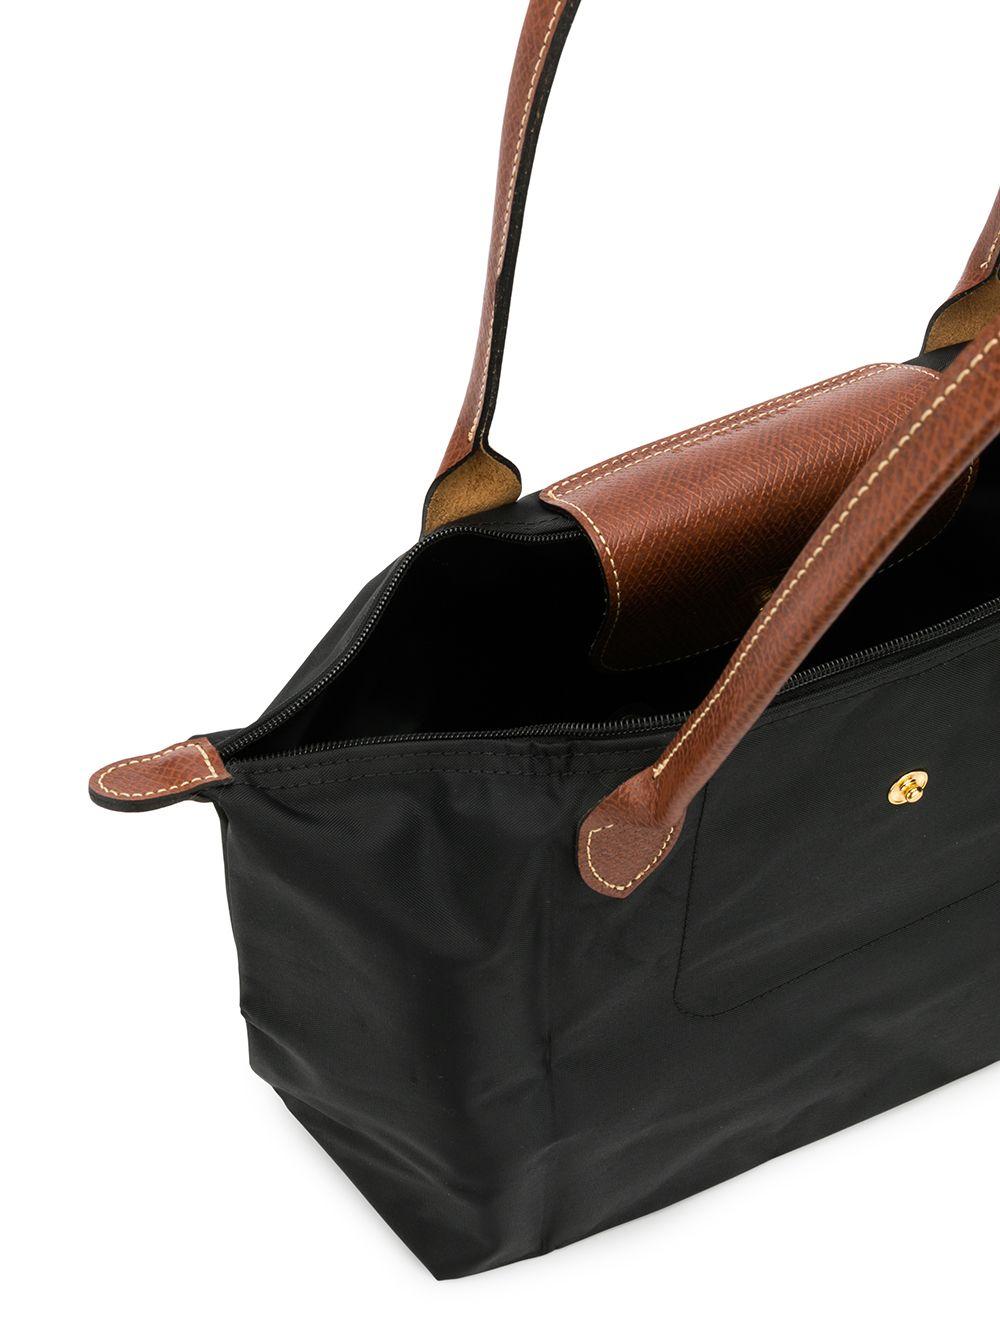 Longchamp Medium Le Pliage Shoulder Bag in Black